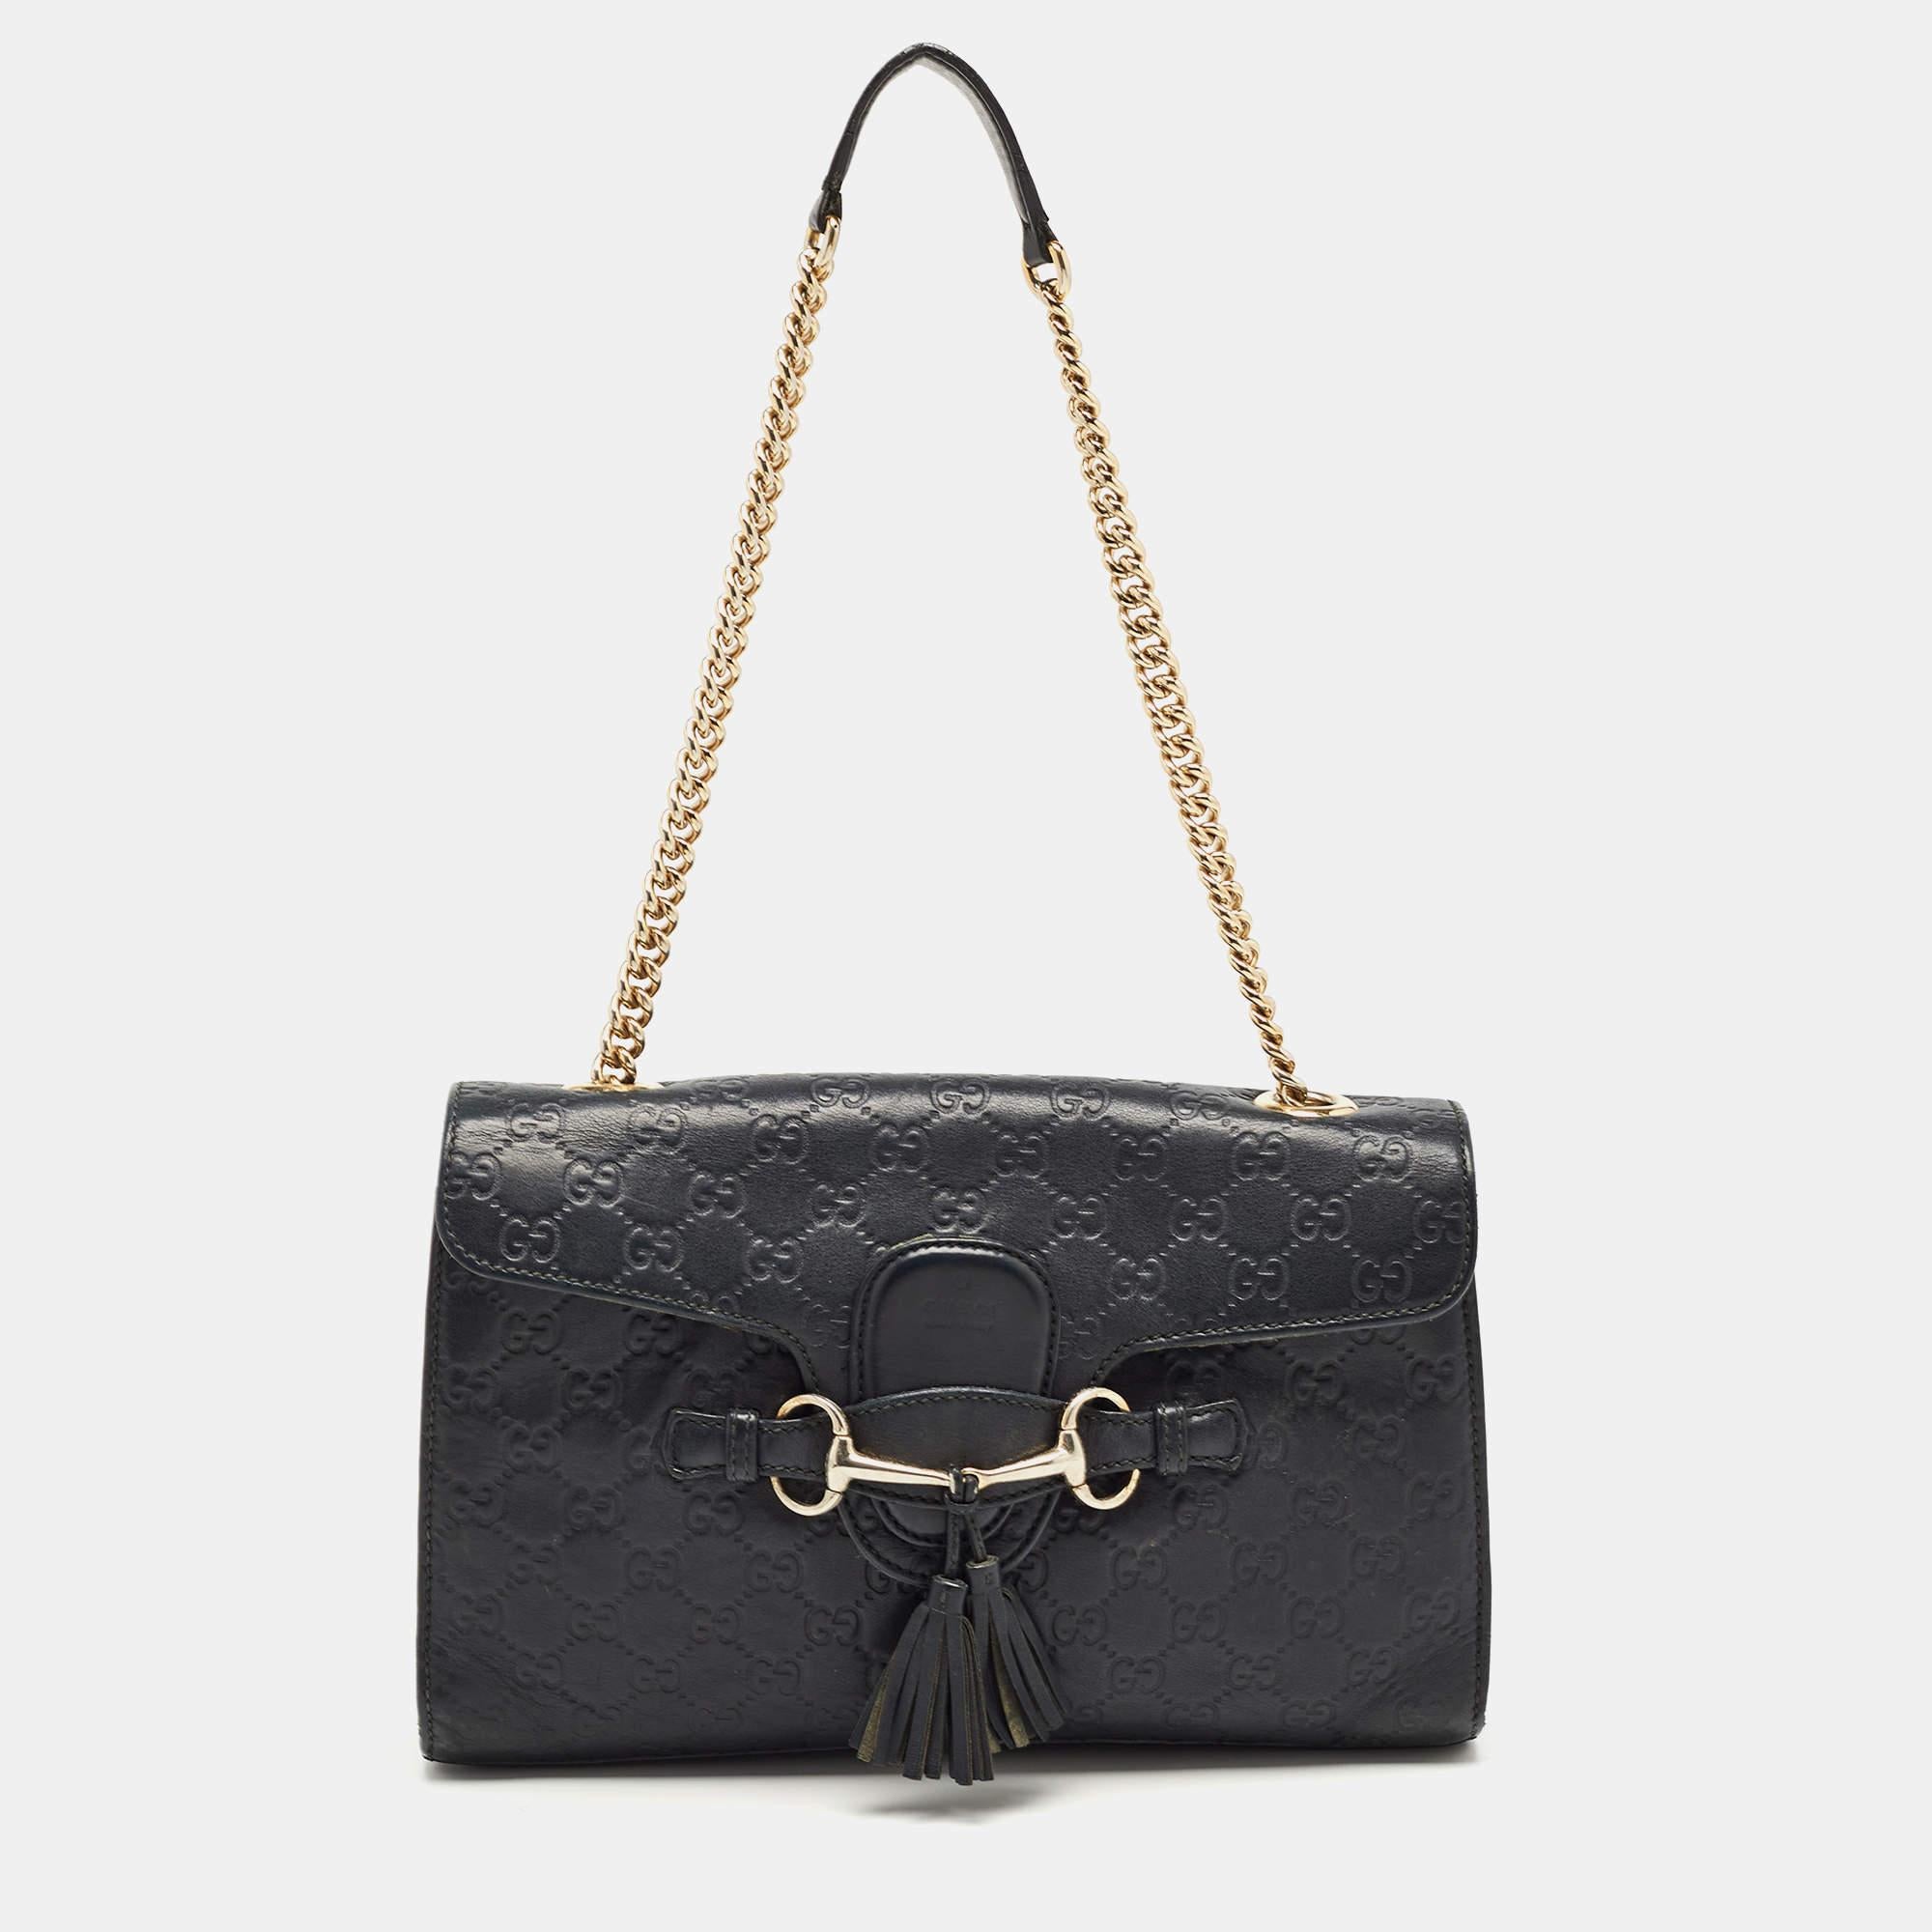 Gucci Black Guccisima Leather Medium Emily Shoulder Bag For Sale 1